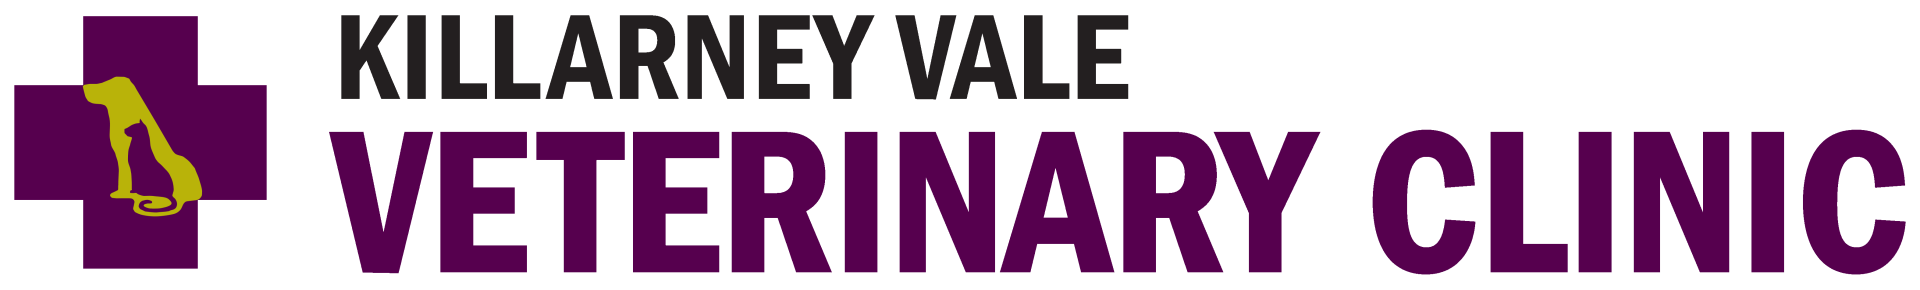 Killarney Vale Veterinary Clinic: Your Vet on the Central Coast